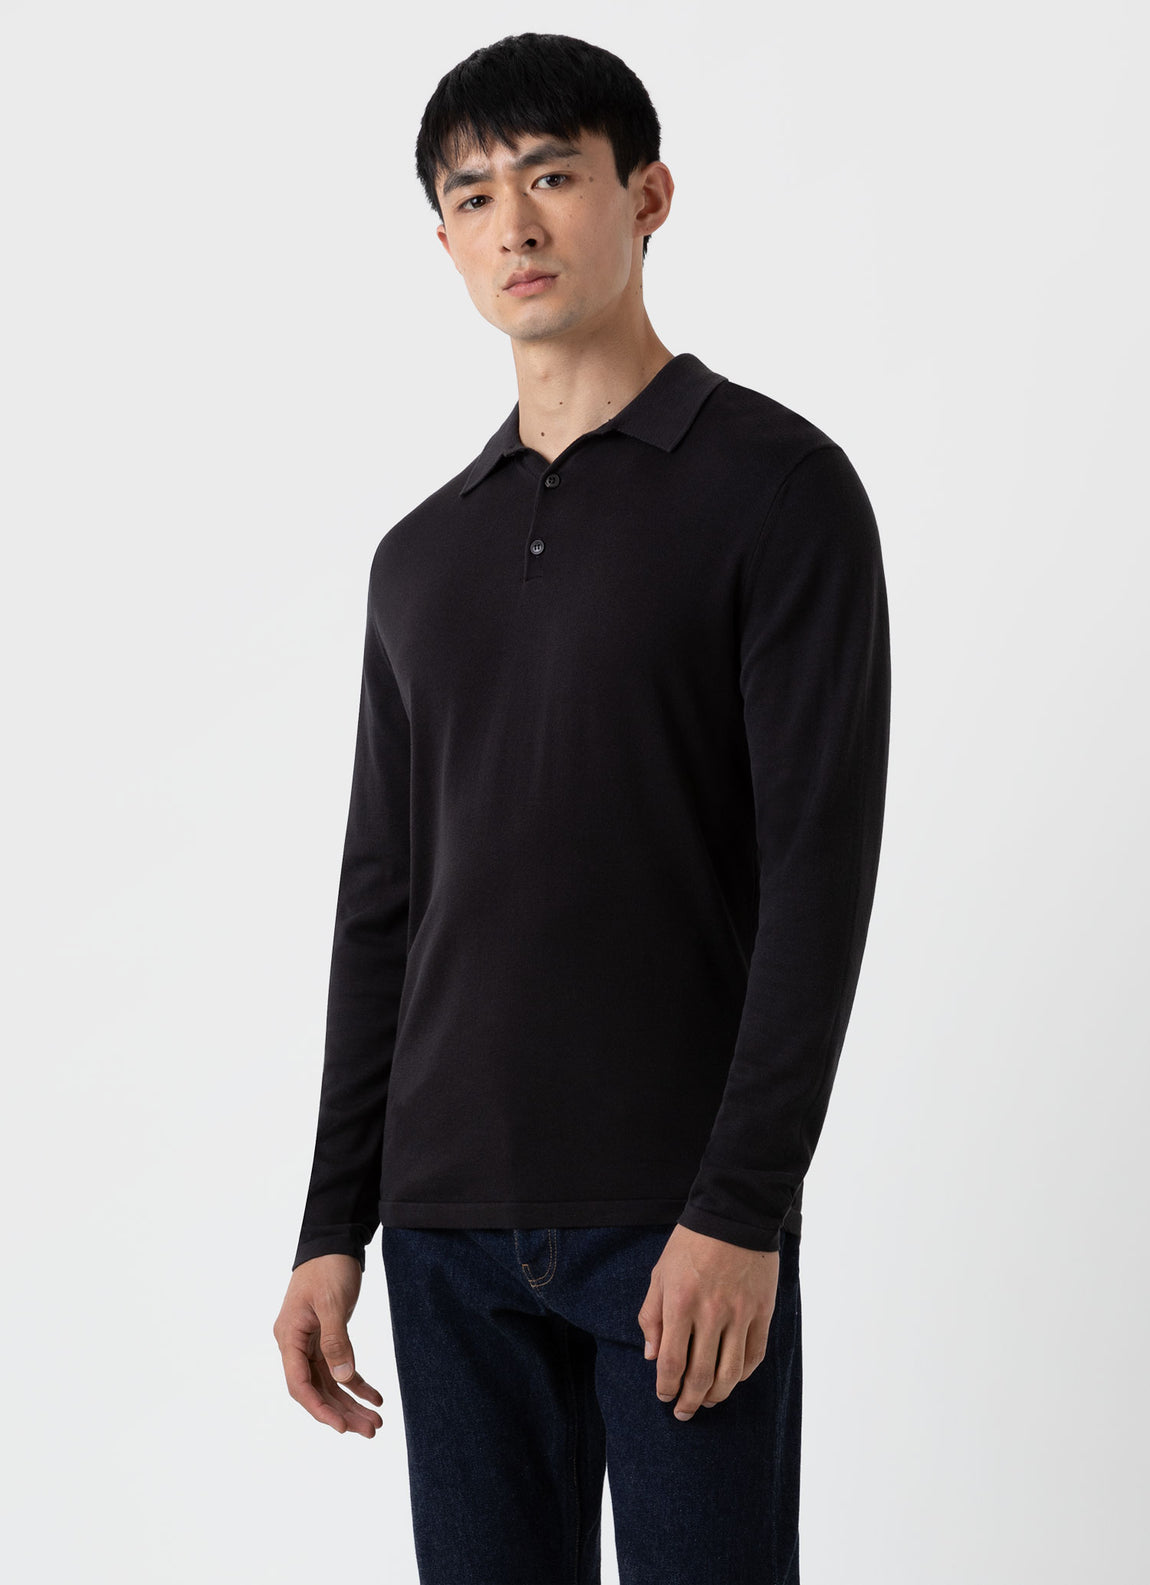 Men's Sea Island Cotton Long Sleeve Polo Shirt in Black | Sunspel